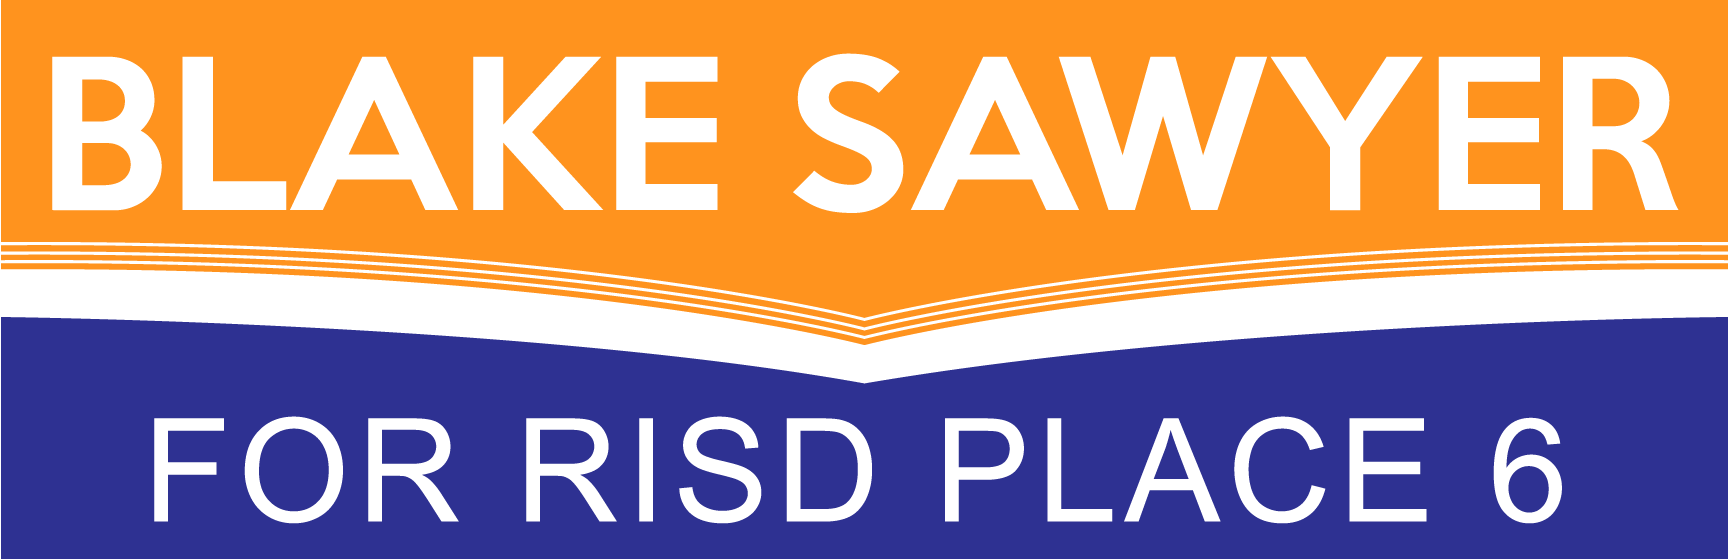 Blake Sawyer Campaign logo